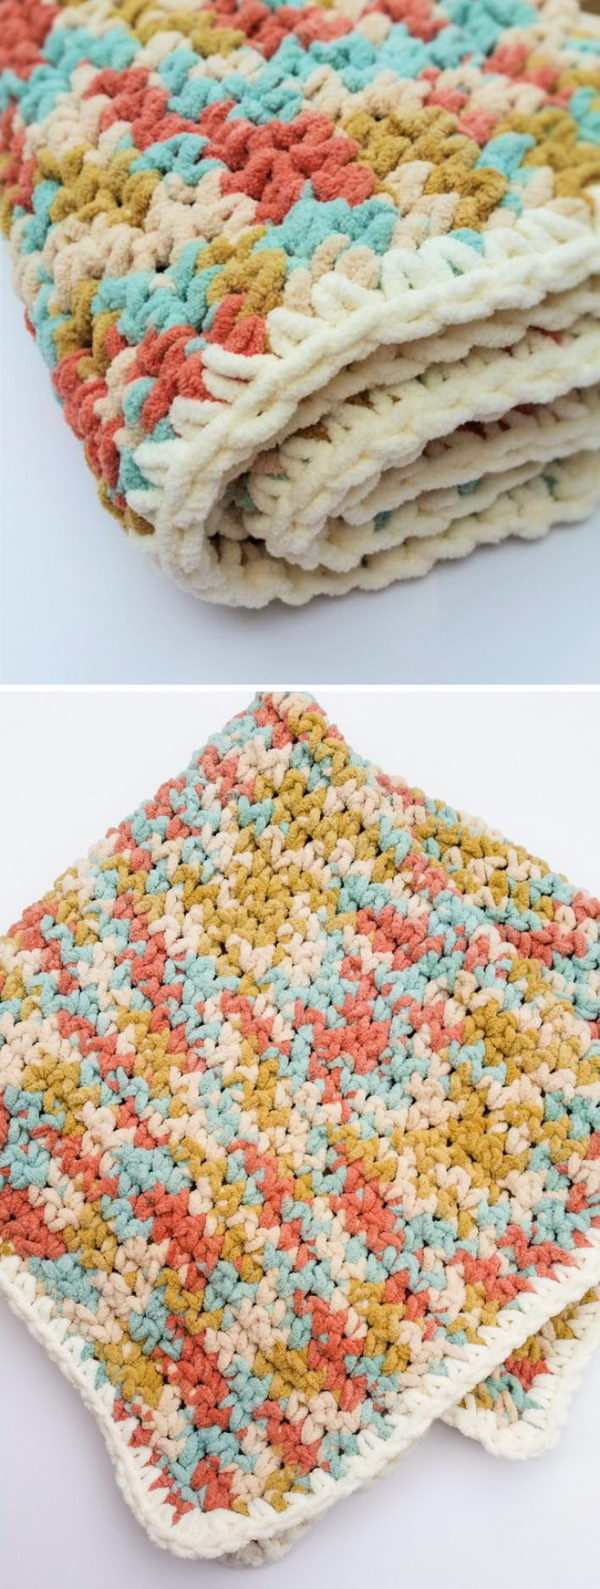 Free Easy Crochet Patterns 30 Free Crochet Patterns For Blankets Hative